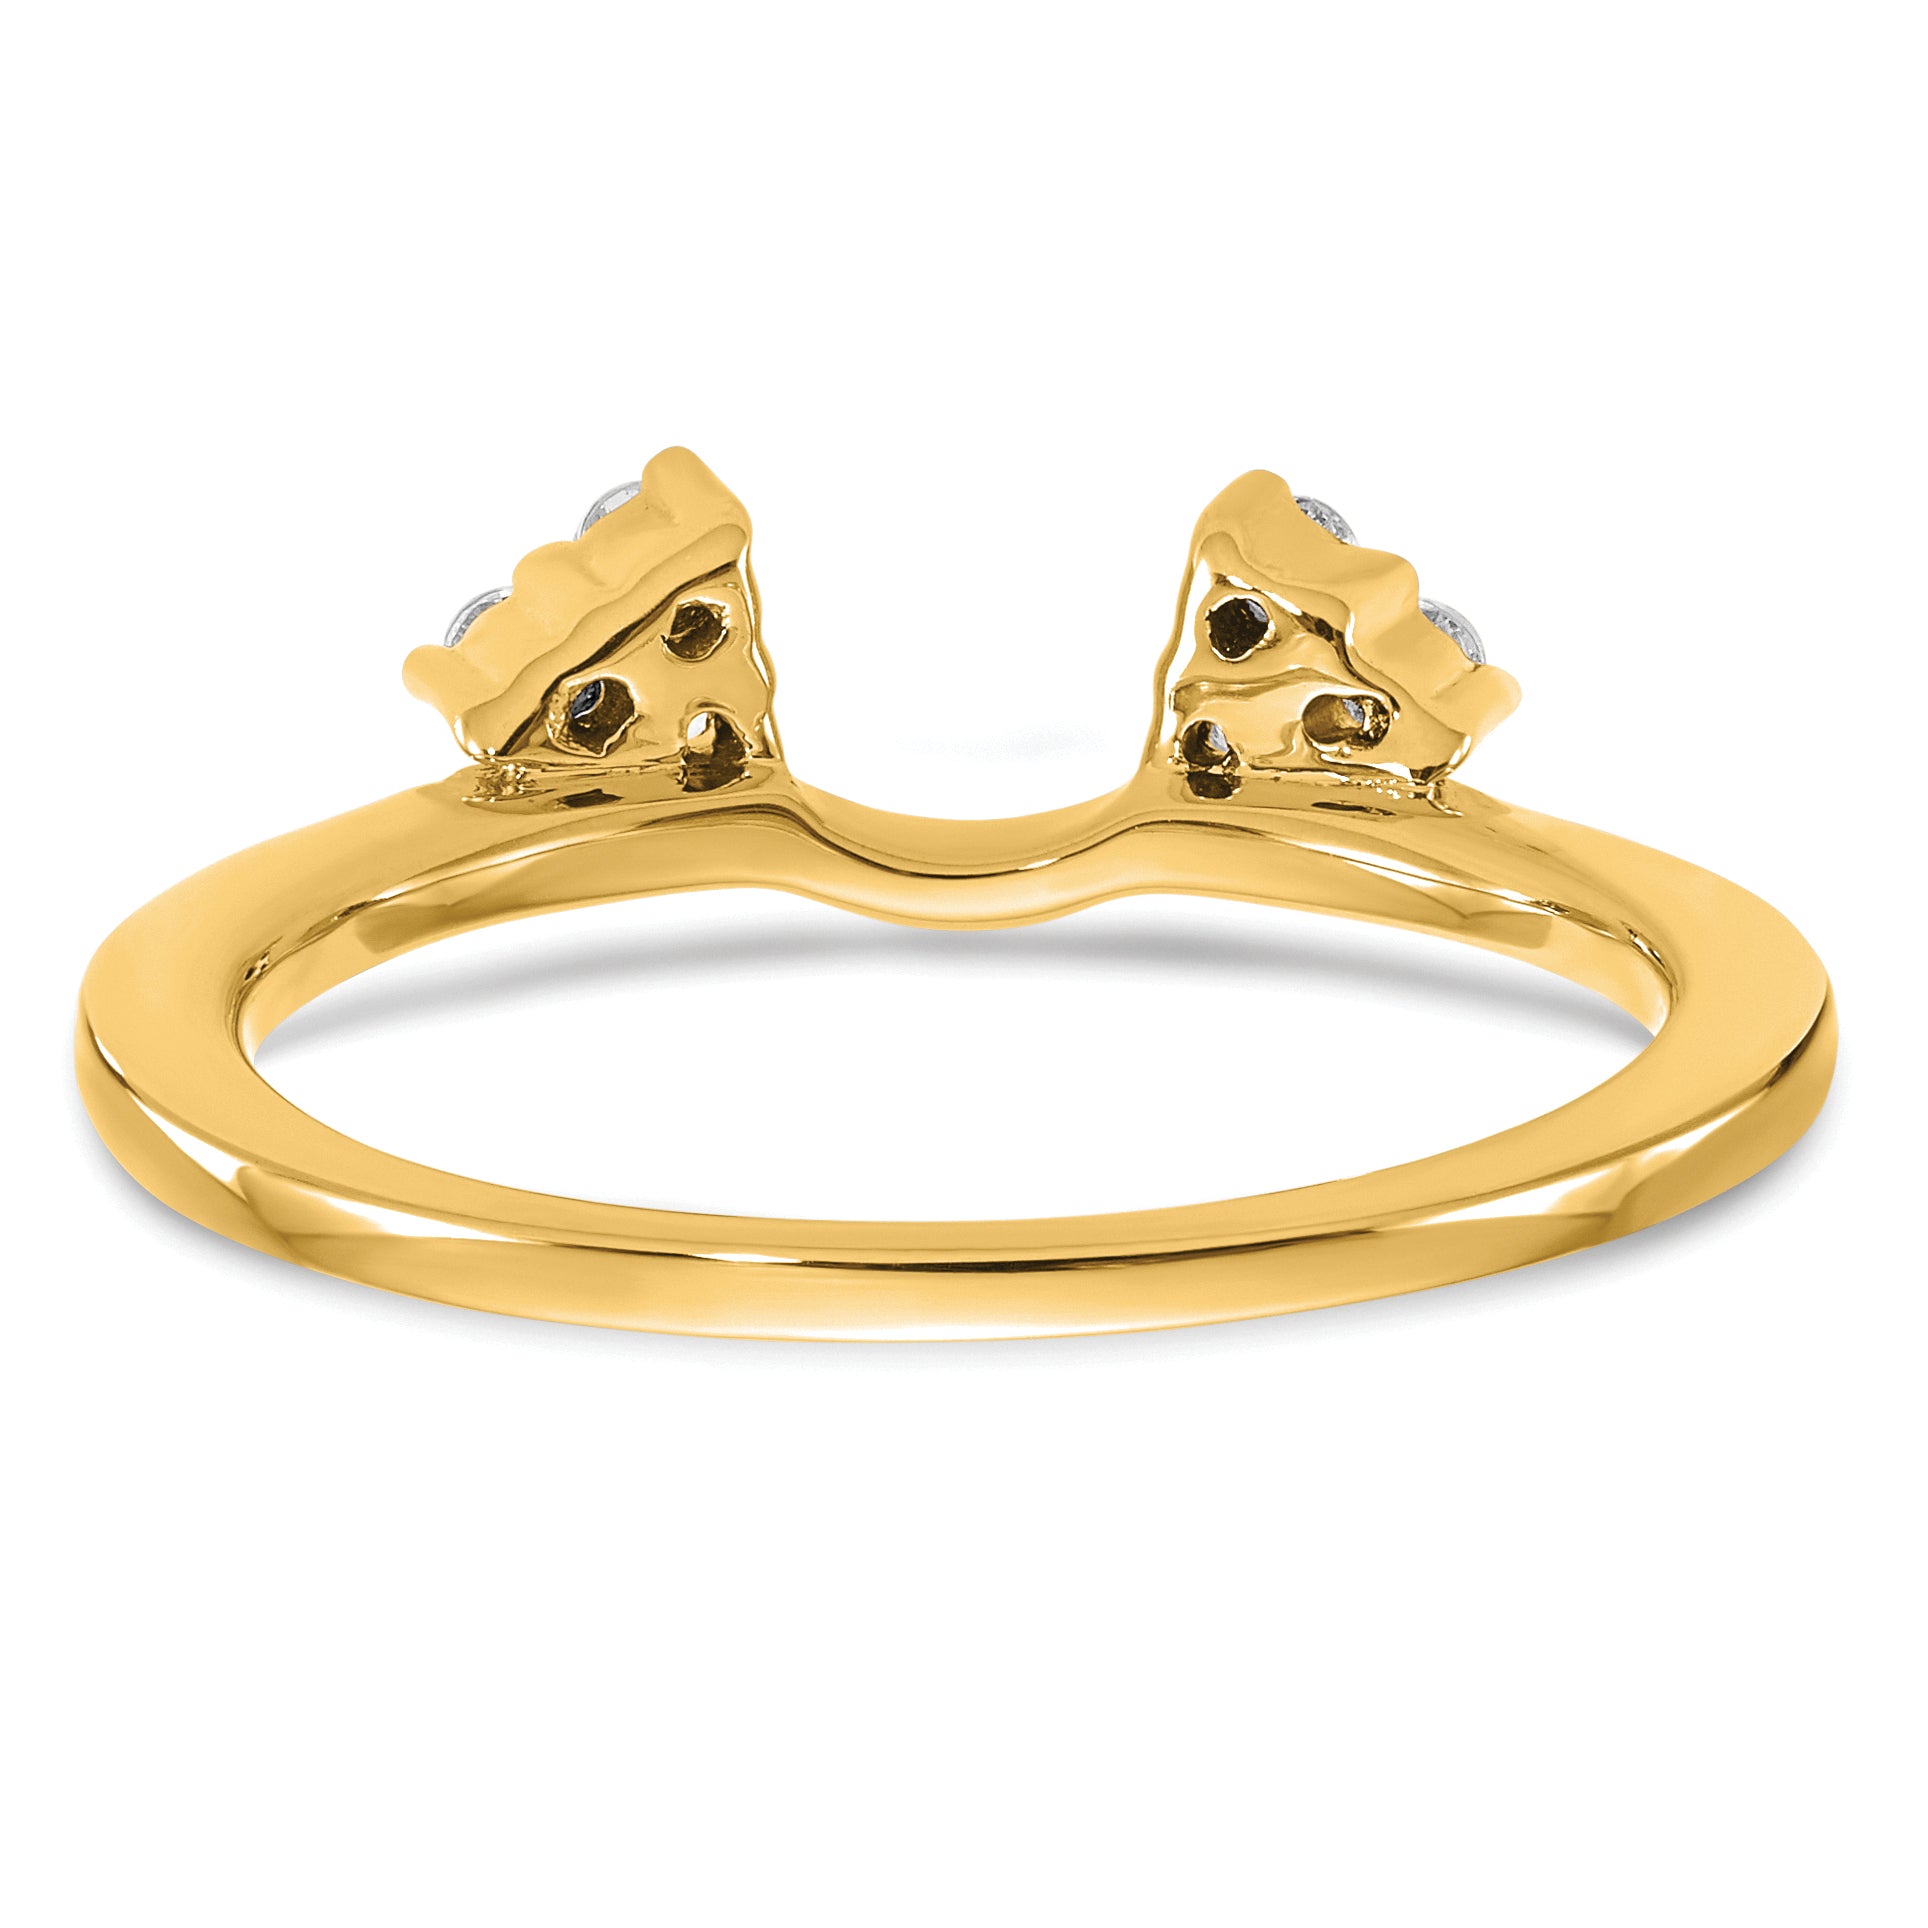 14K White Gold 1/6 carat Diamond Complete Wrap Ring